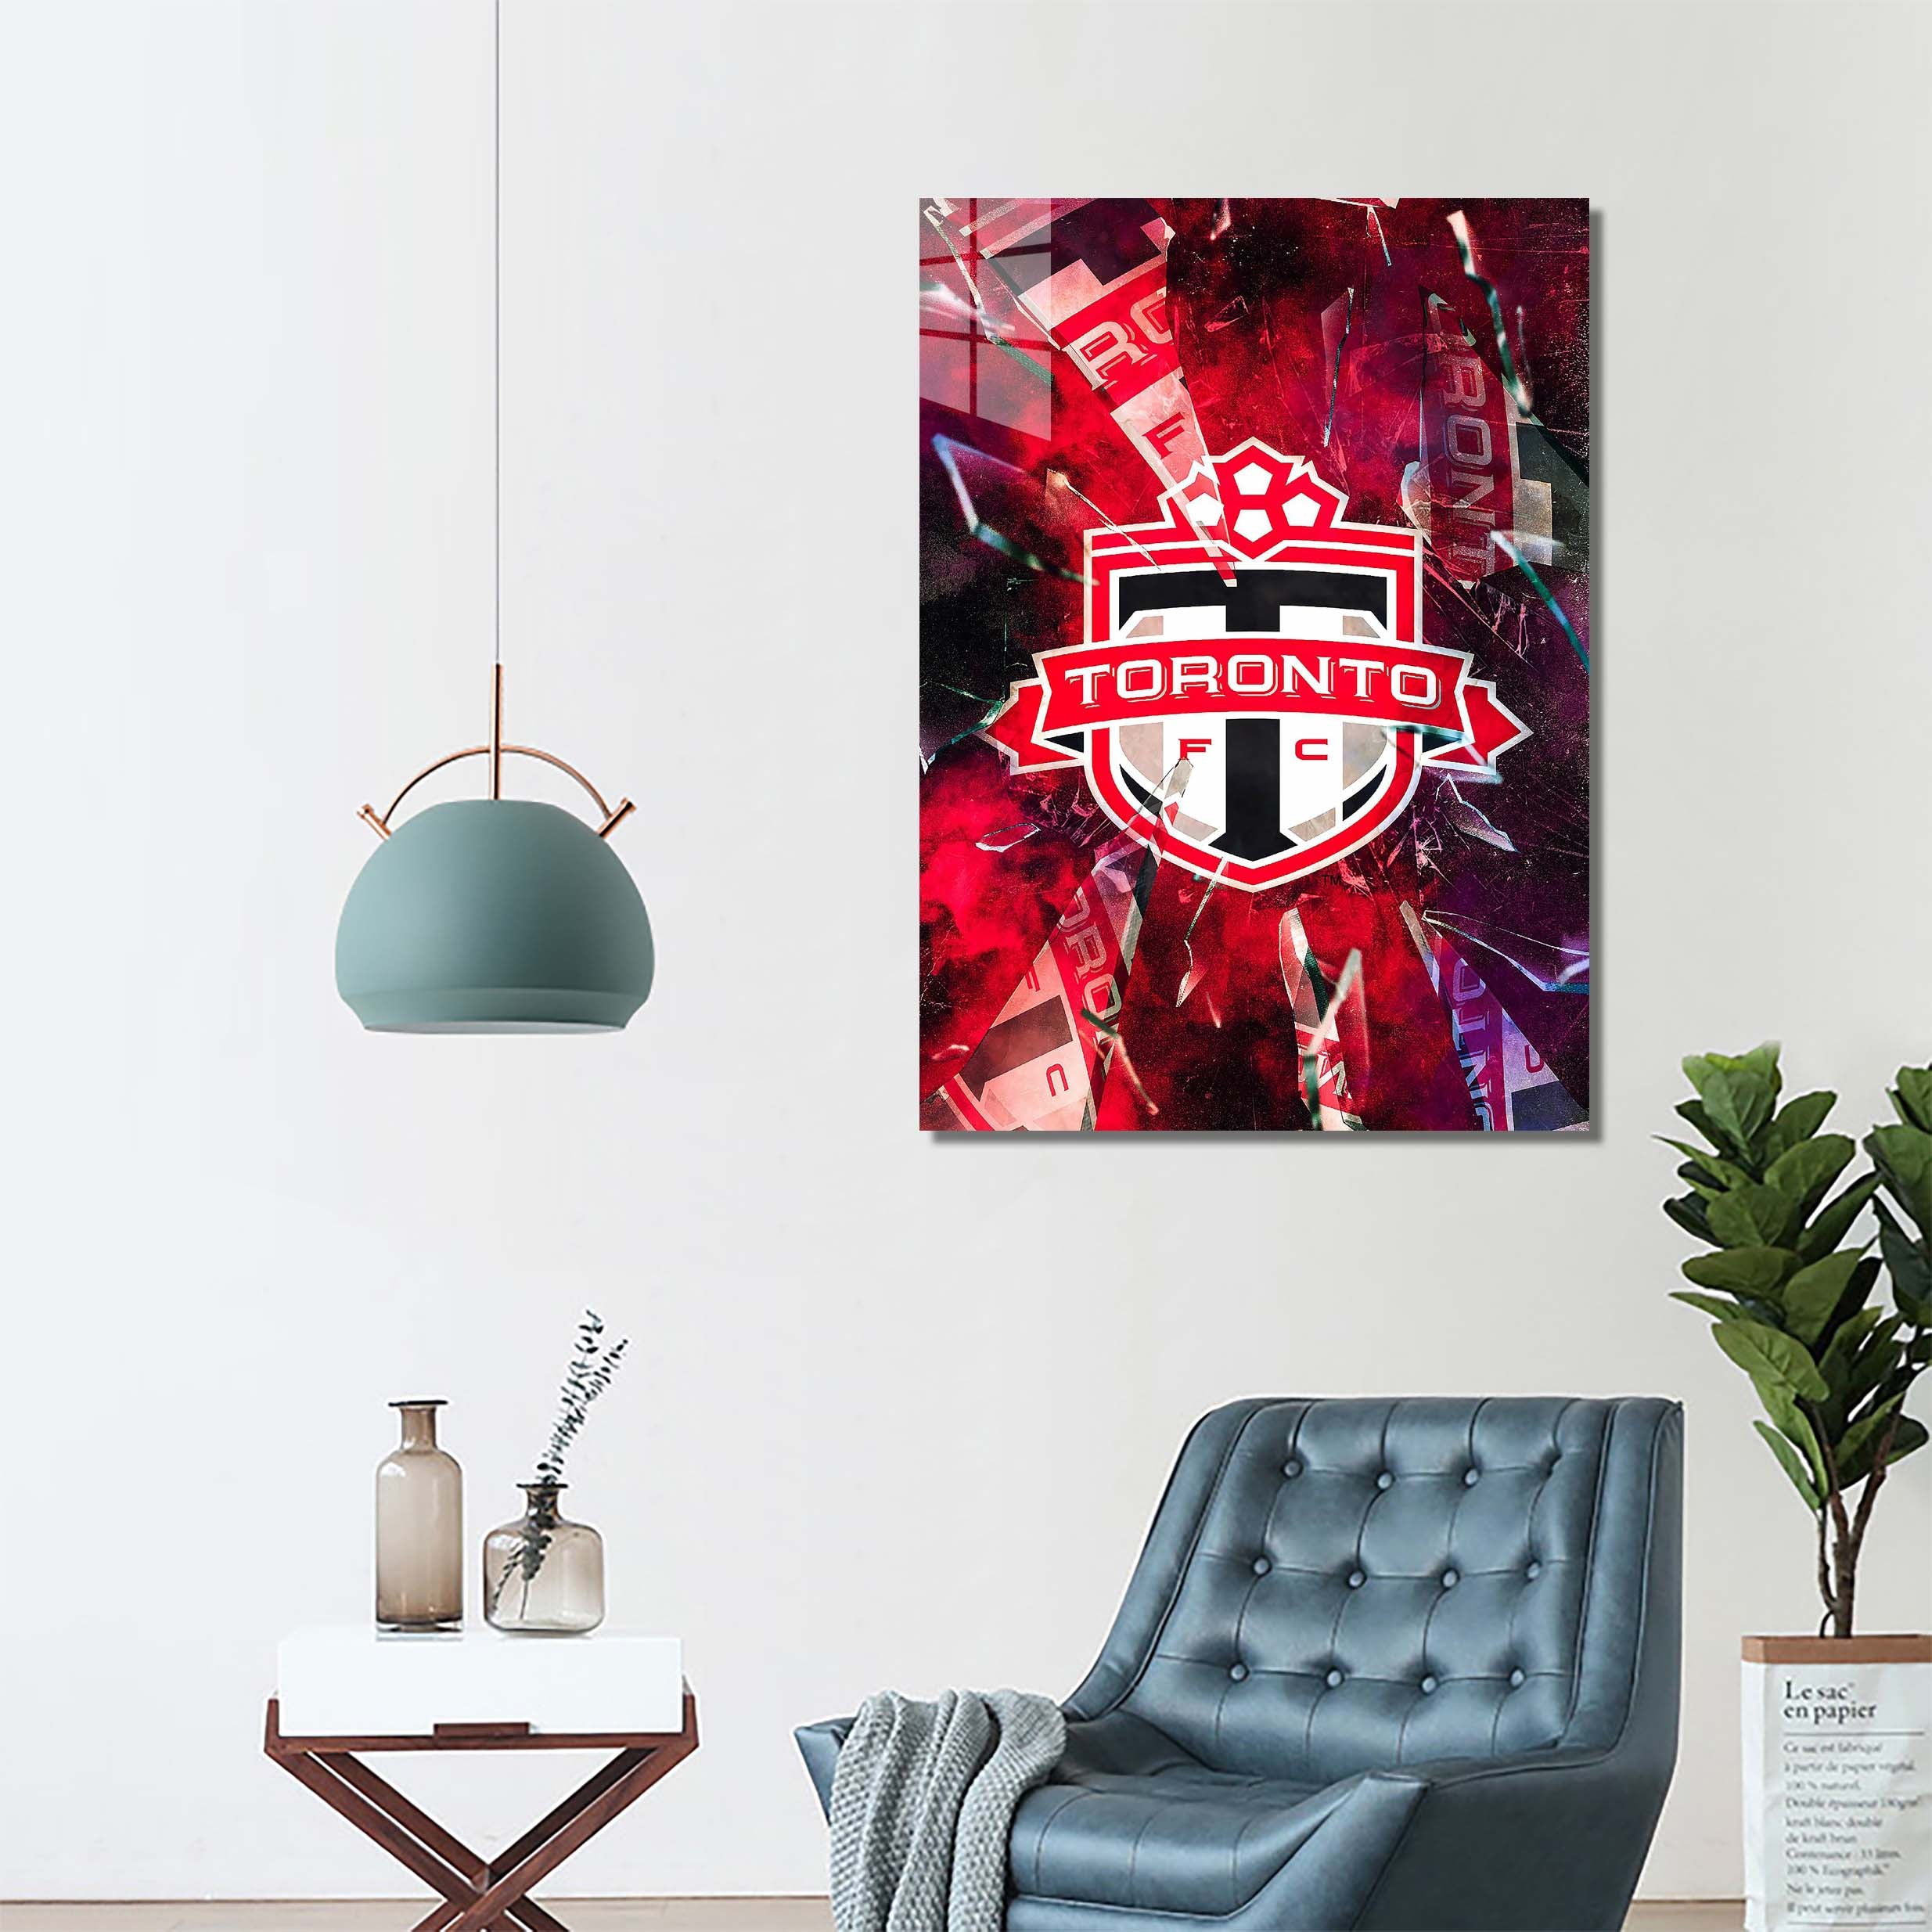 Toronto FC-designed by @Hoang Van Thuan